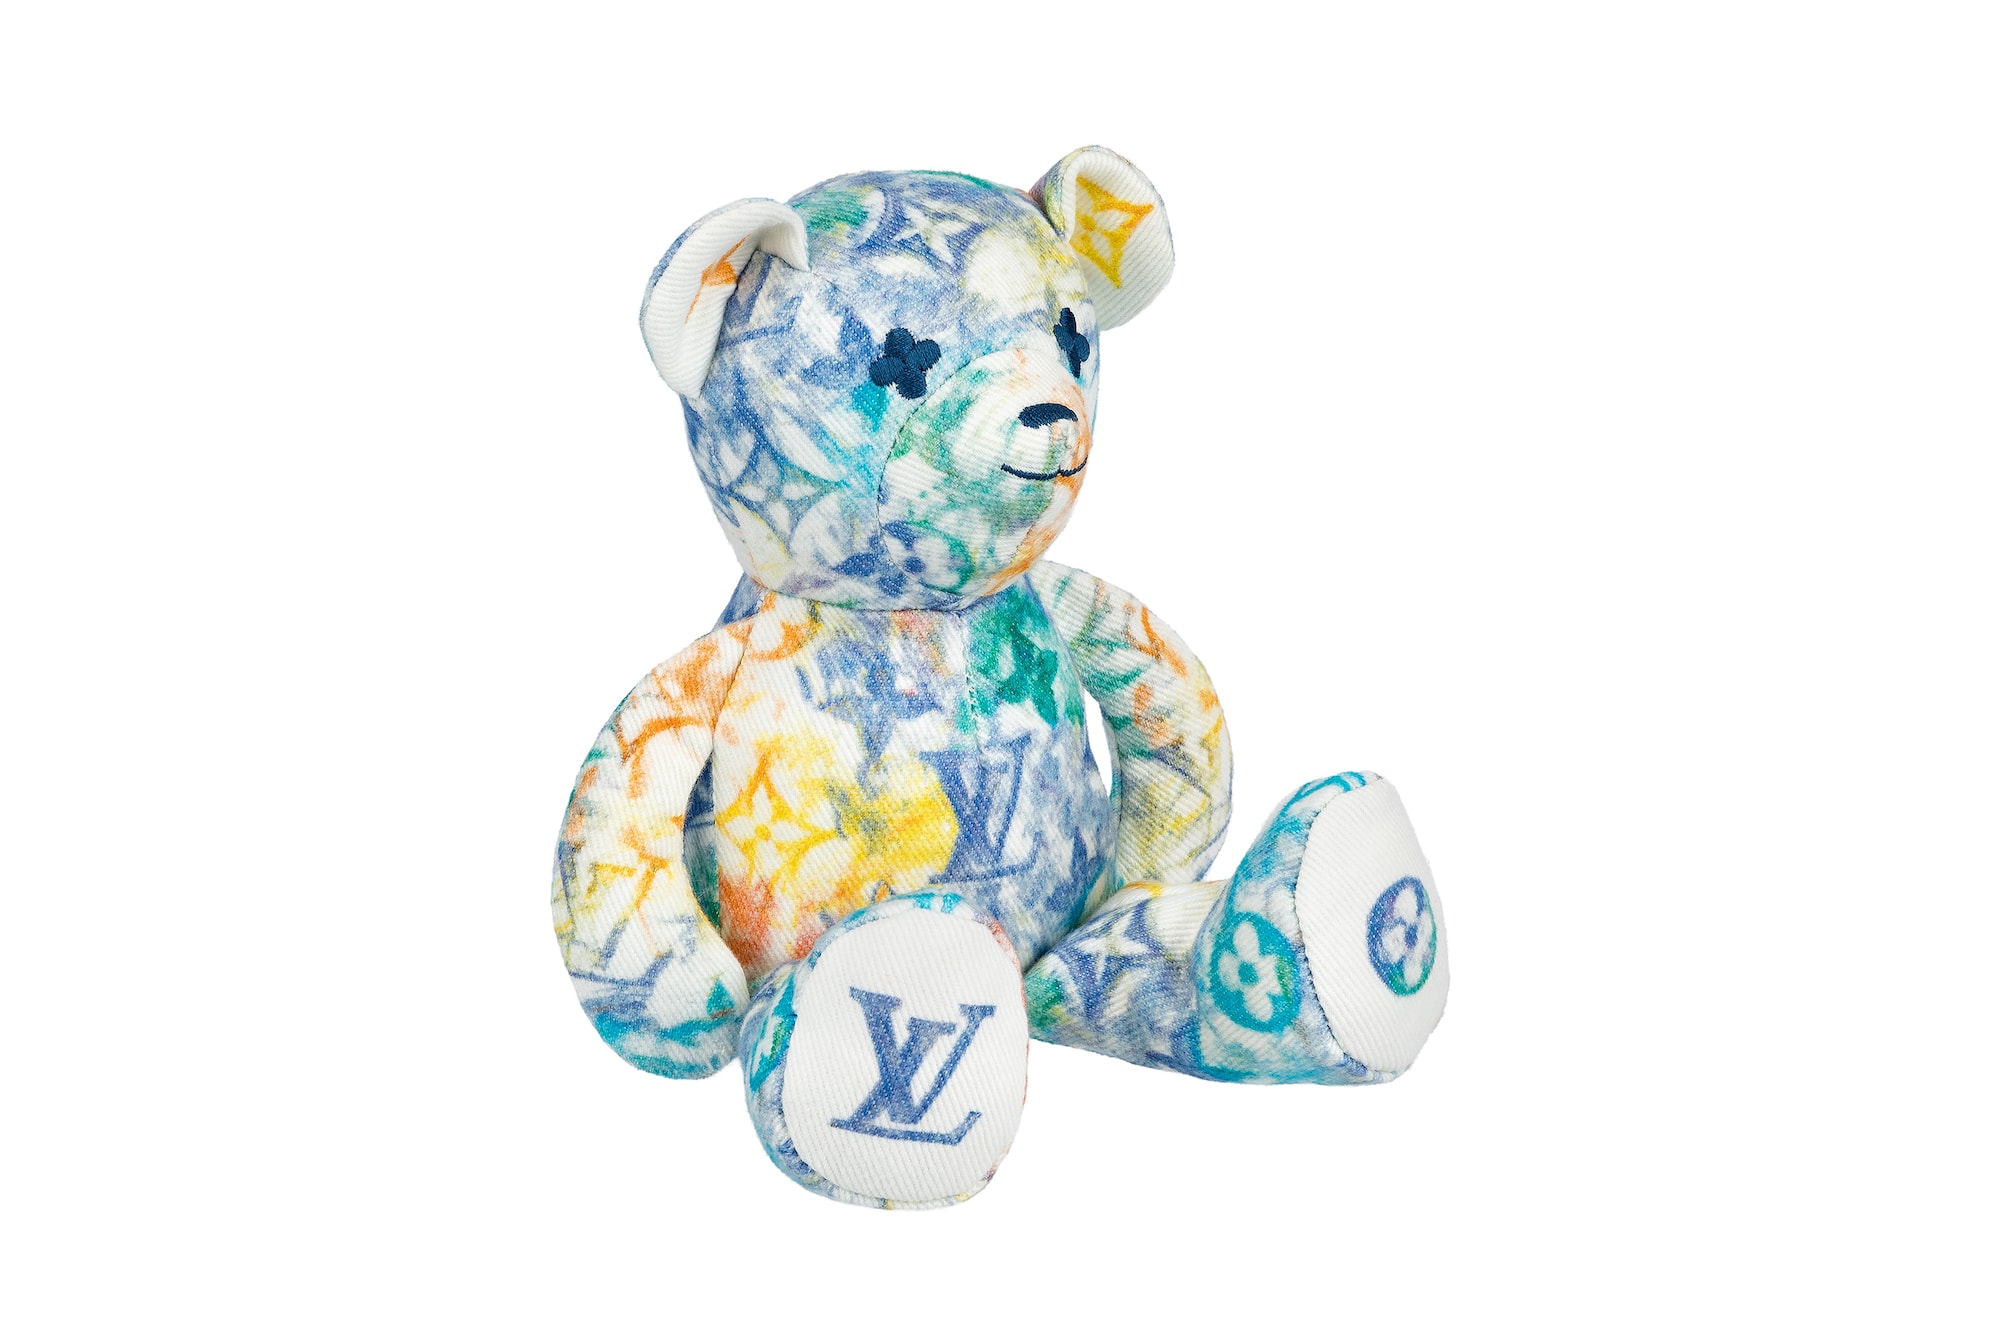 Louis Vuitton Pre-Spring 2021 Drop 2 Release Accessories Where to Buy Virgil Abloh Rainbow Pastel Monogram Bags